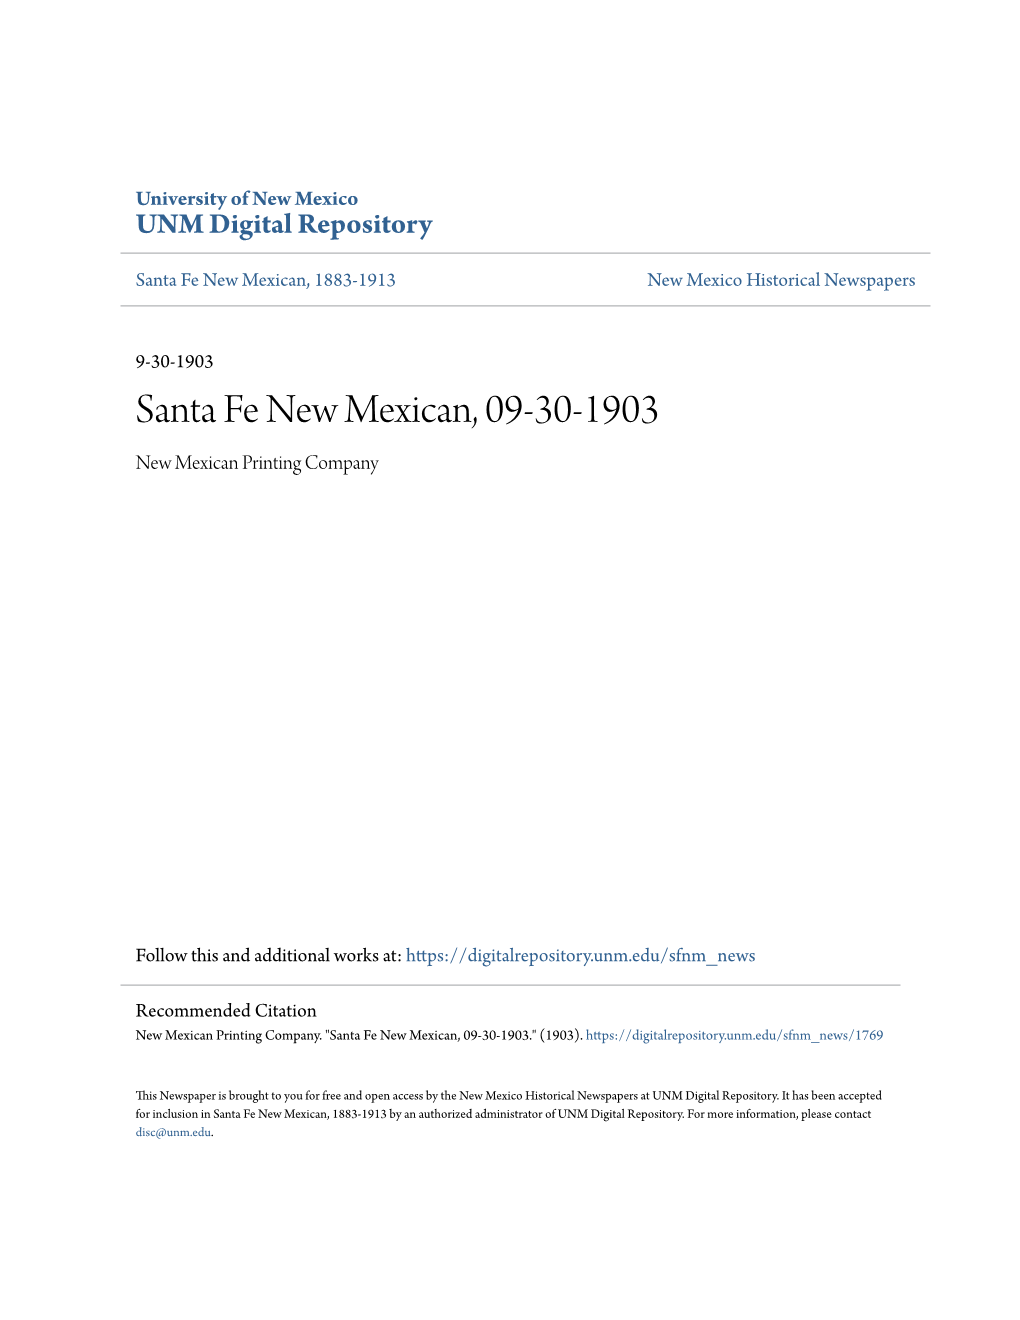 Santa Fe New Mexican, 09-30-1903 New Mexican Printing Company